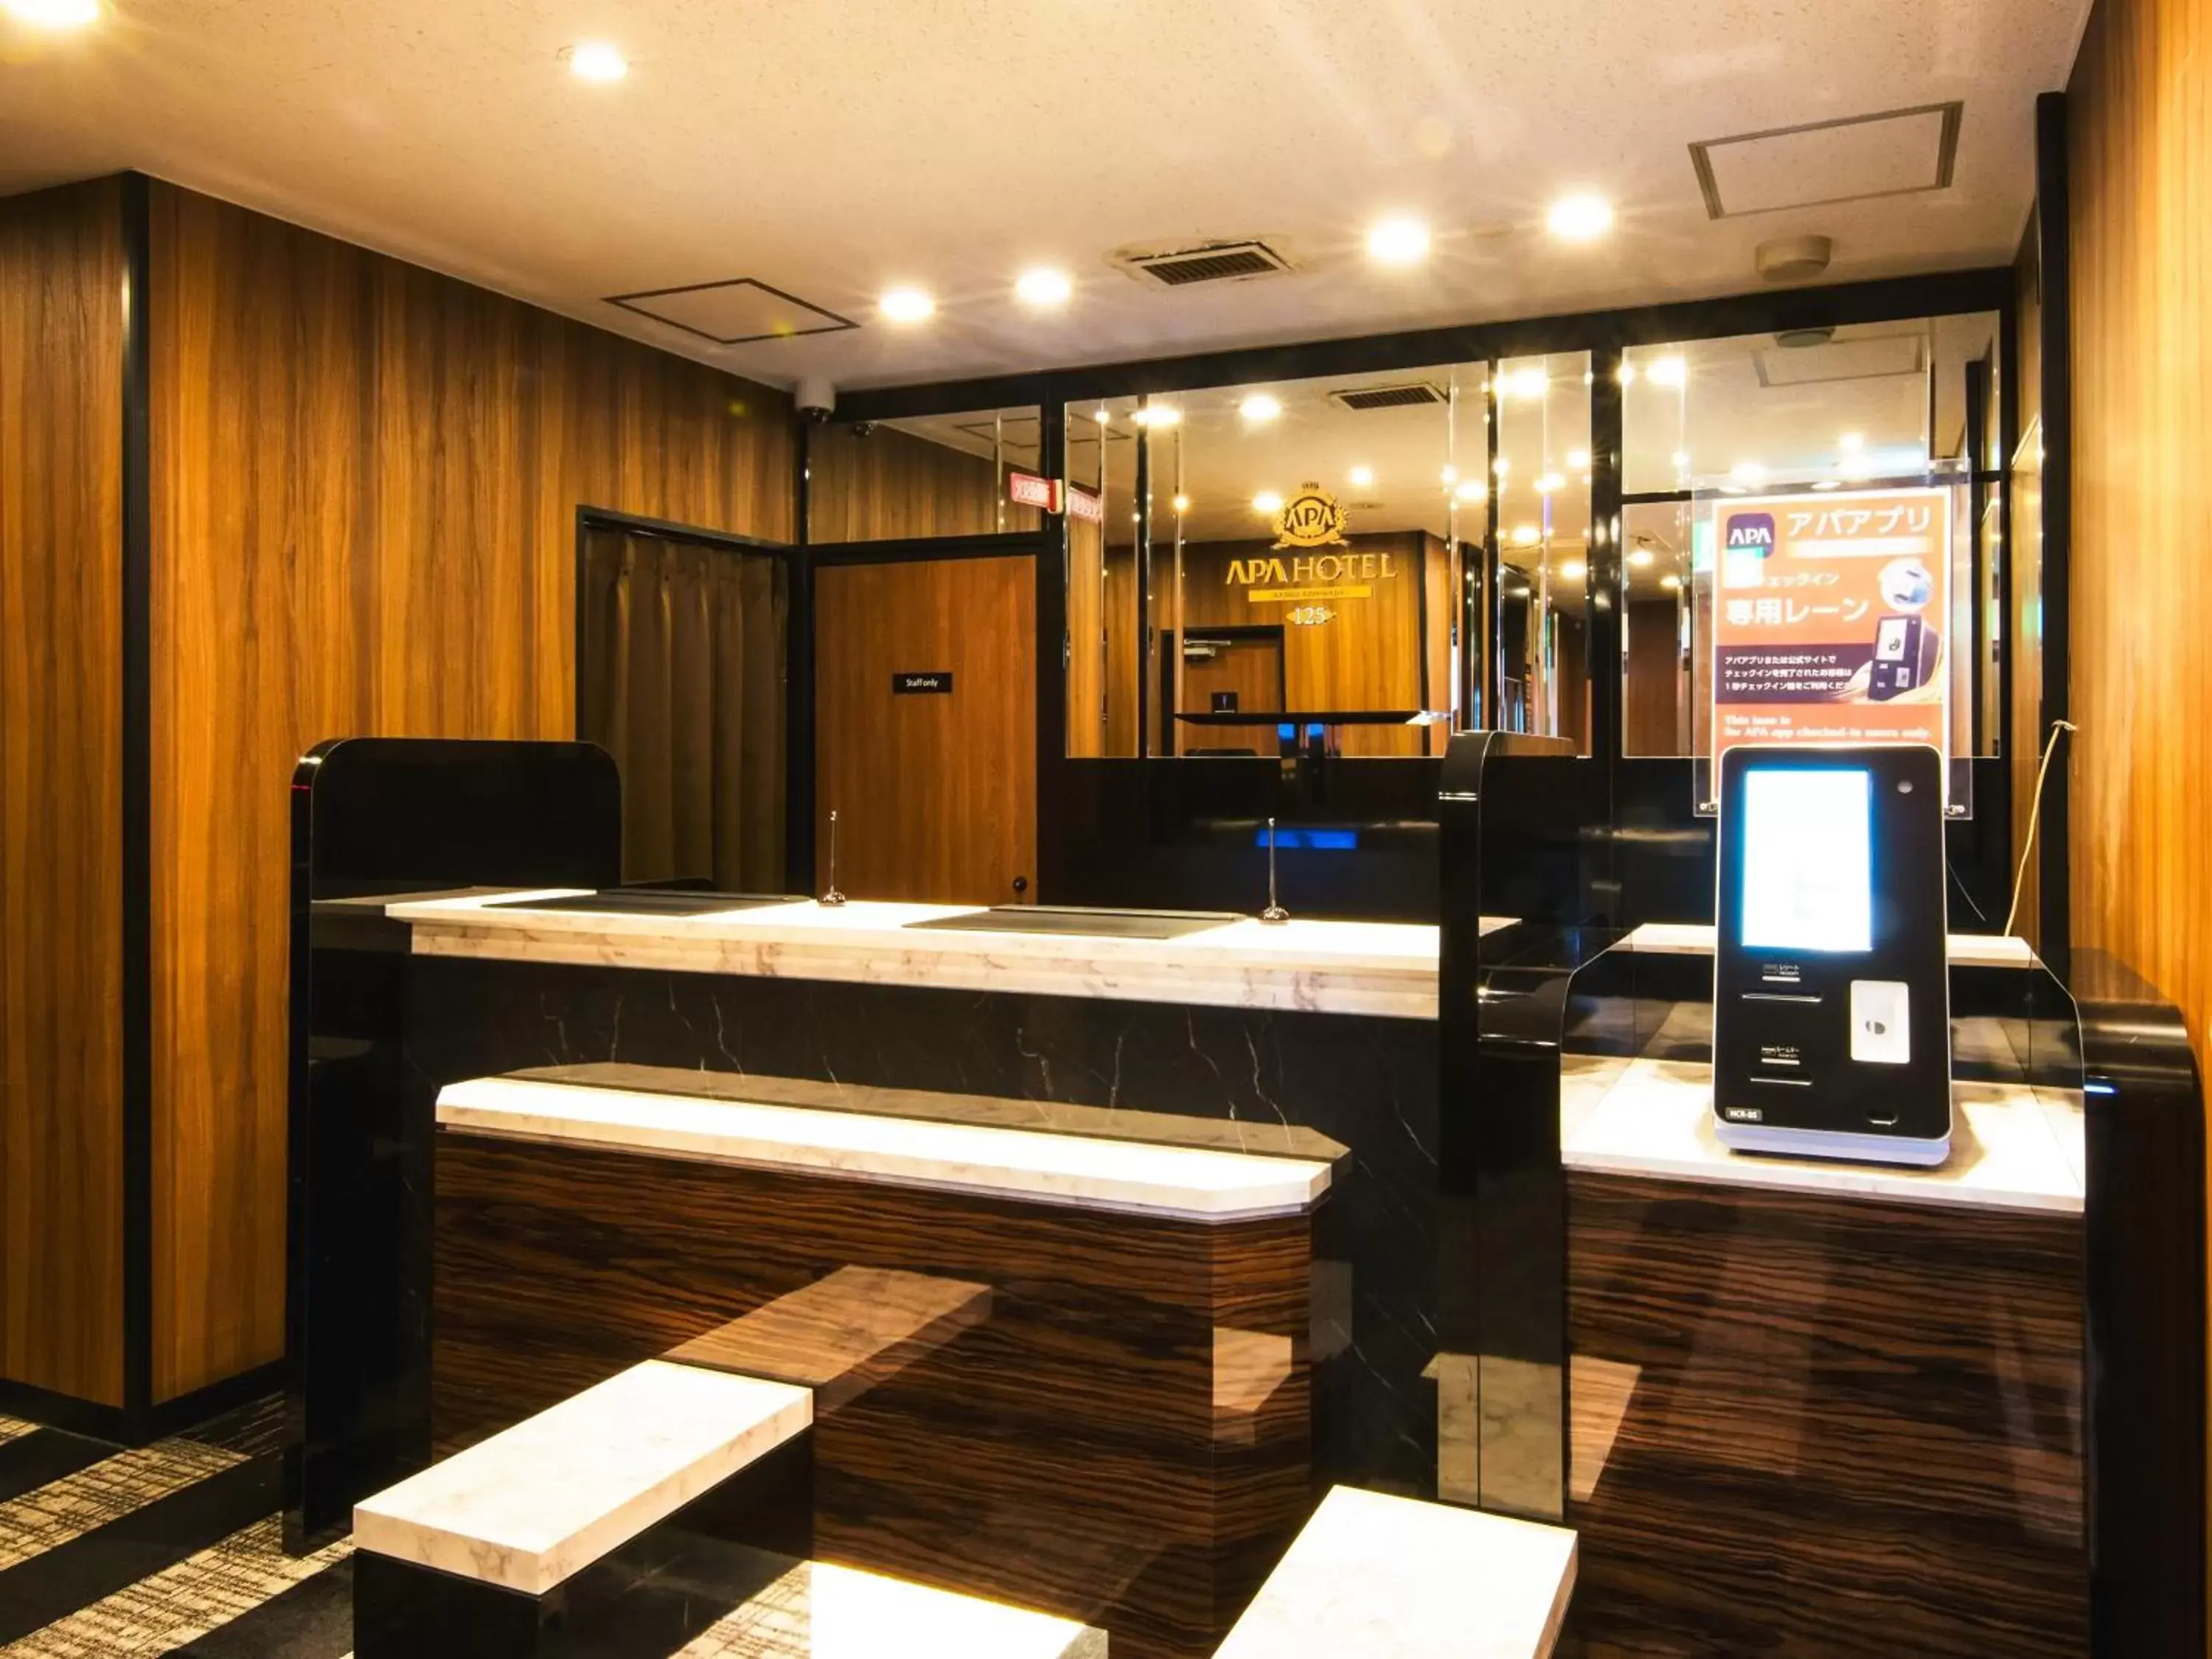 Lobby or reception in APA Hotel Kanku-Kishiwada